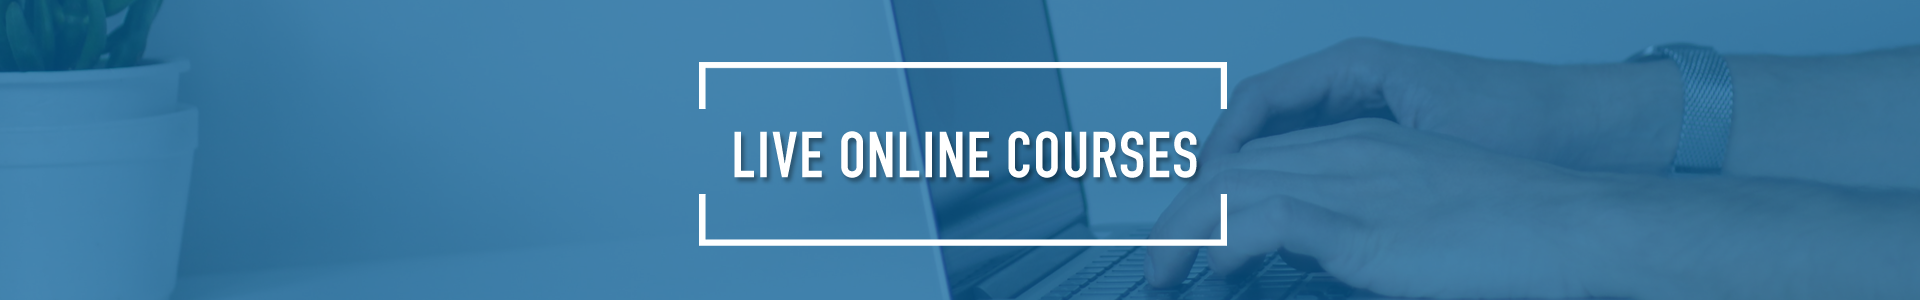 Live online business course